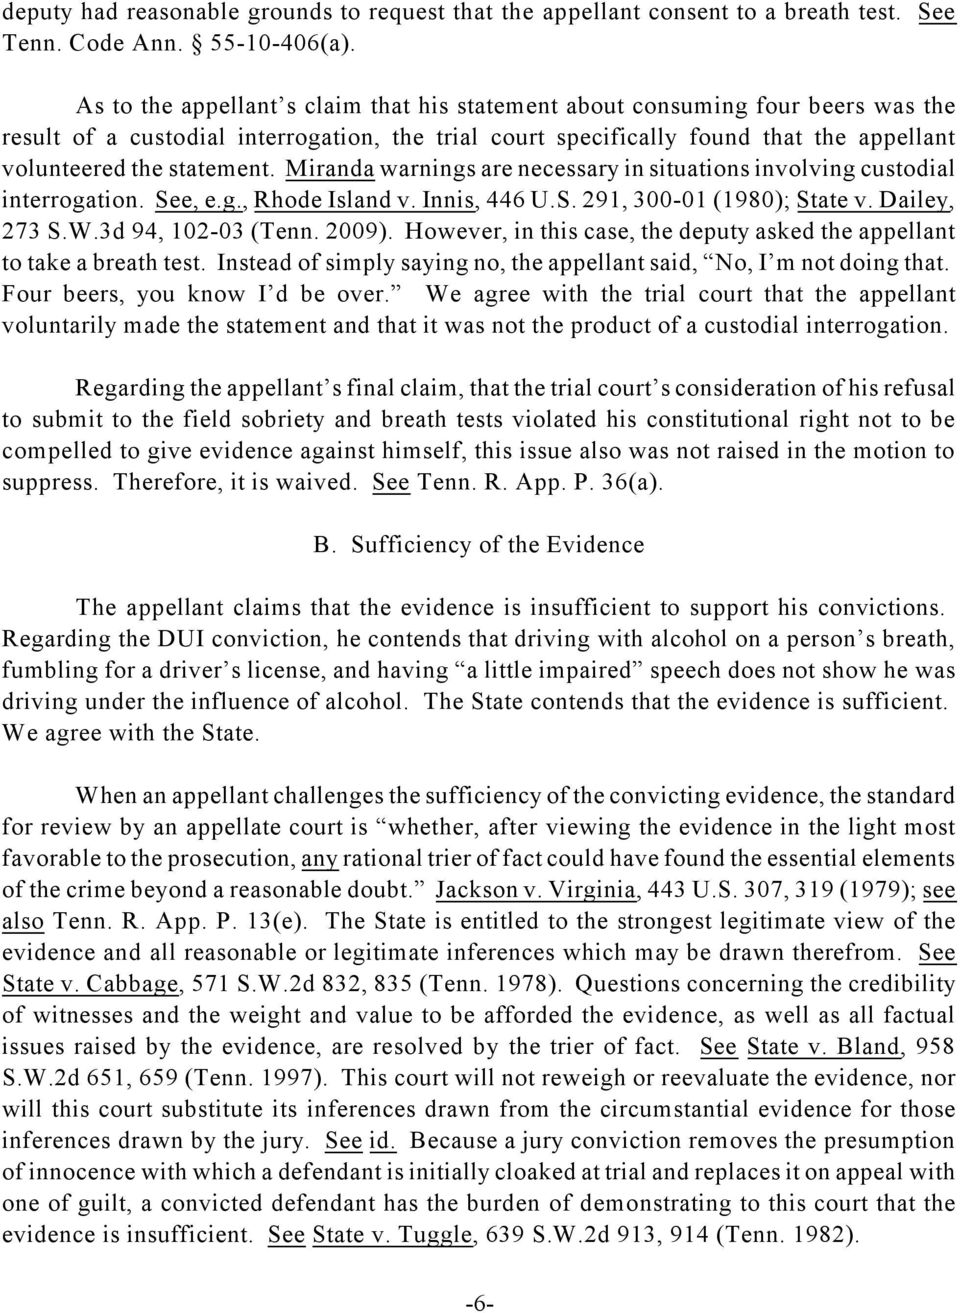 Miranda warnings are necessary in situations involving custodial interrogation. See, e.g., Rhode Island v. Innis, 446 U.S. 291, 300-01 (1980); State v. Dailey, 273 S.W.3d 94, 102-03 (Tenn. 2009).